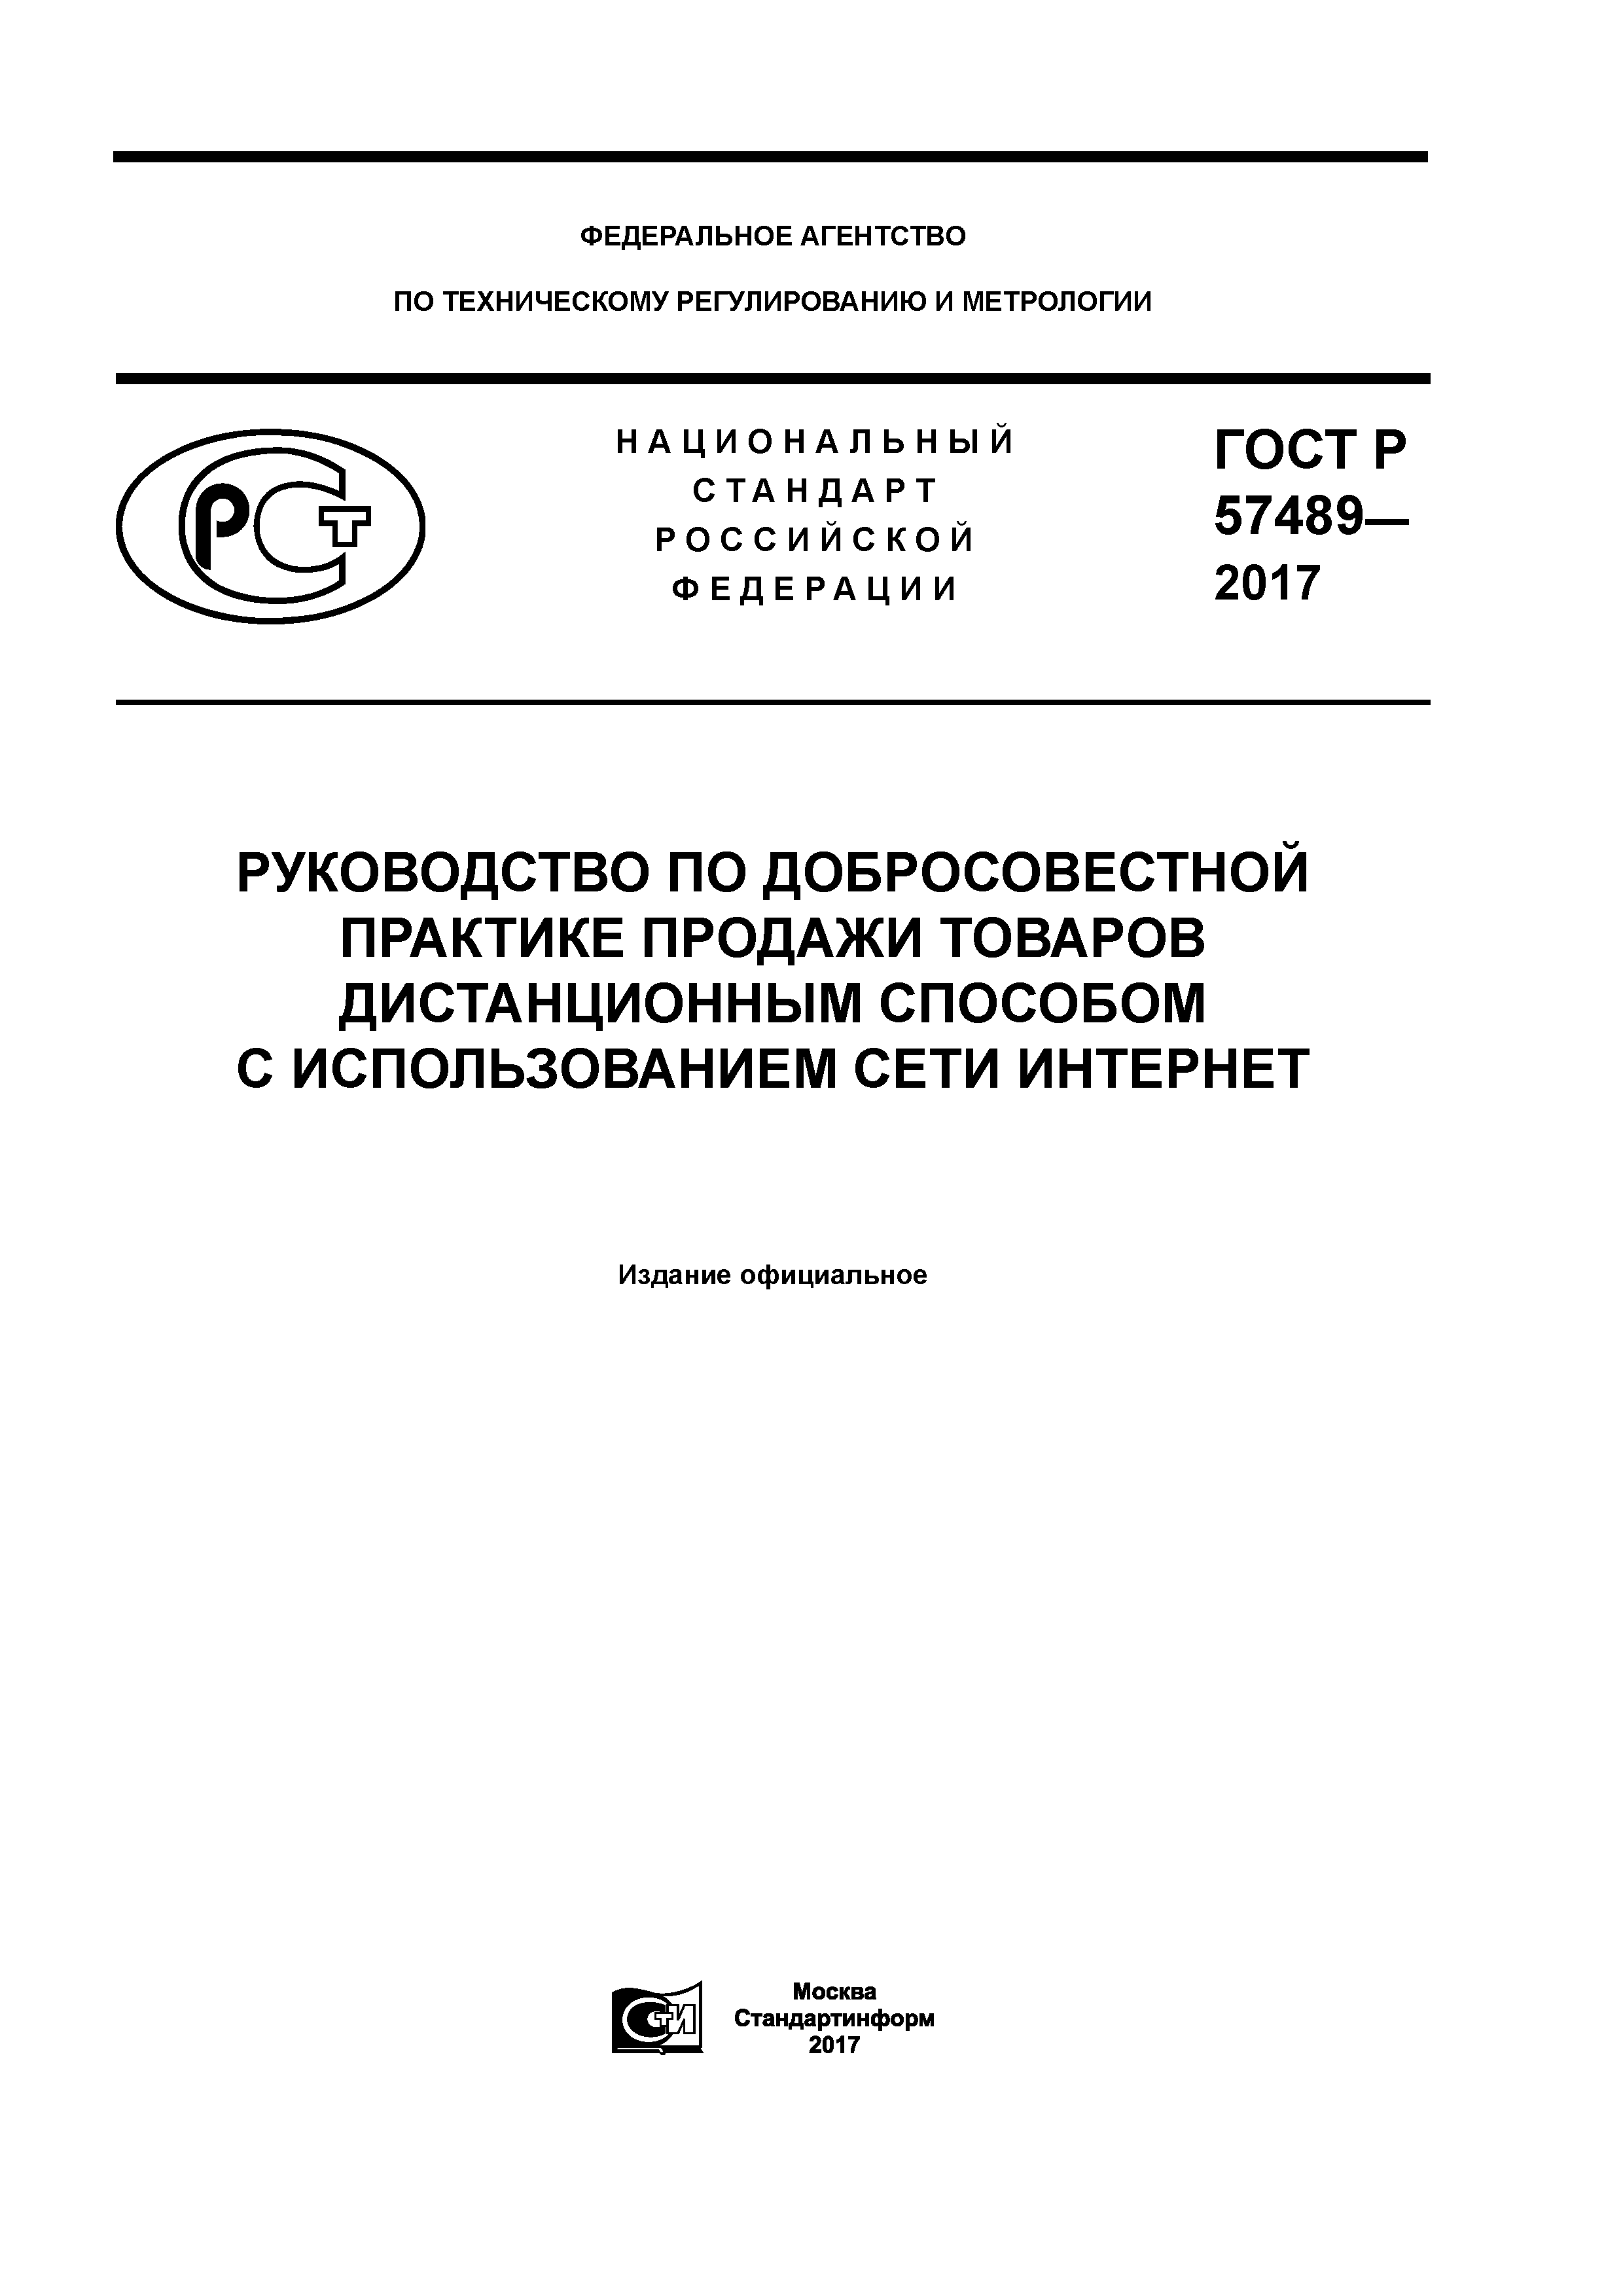 ГОСТ Р 57489-2017